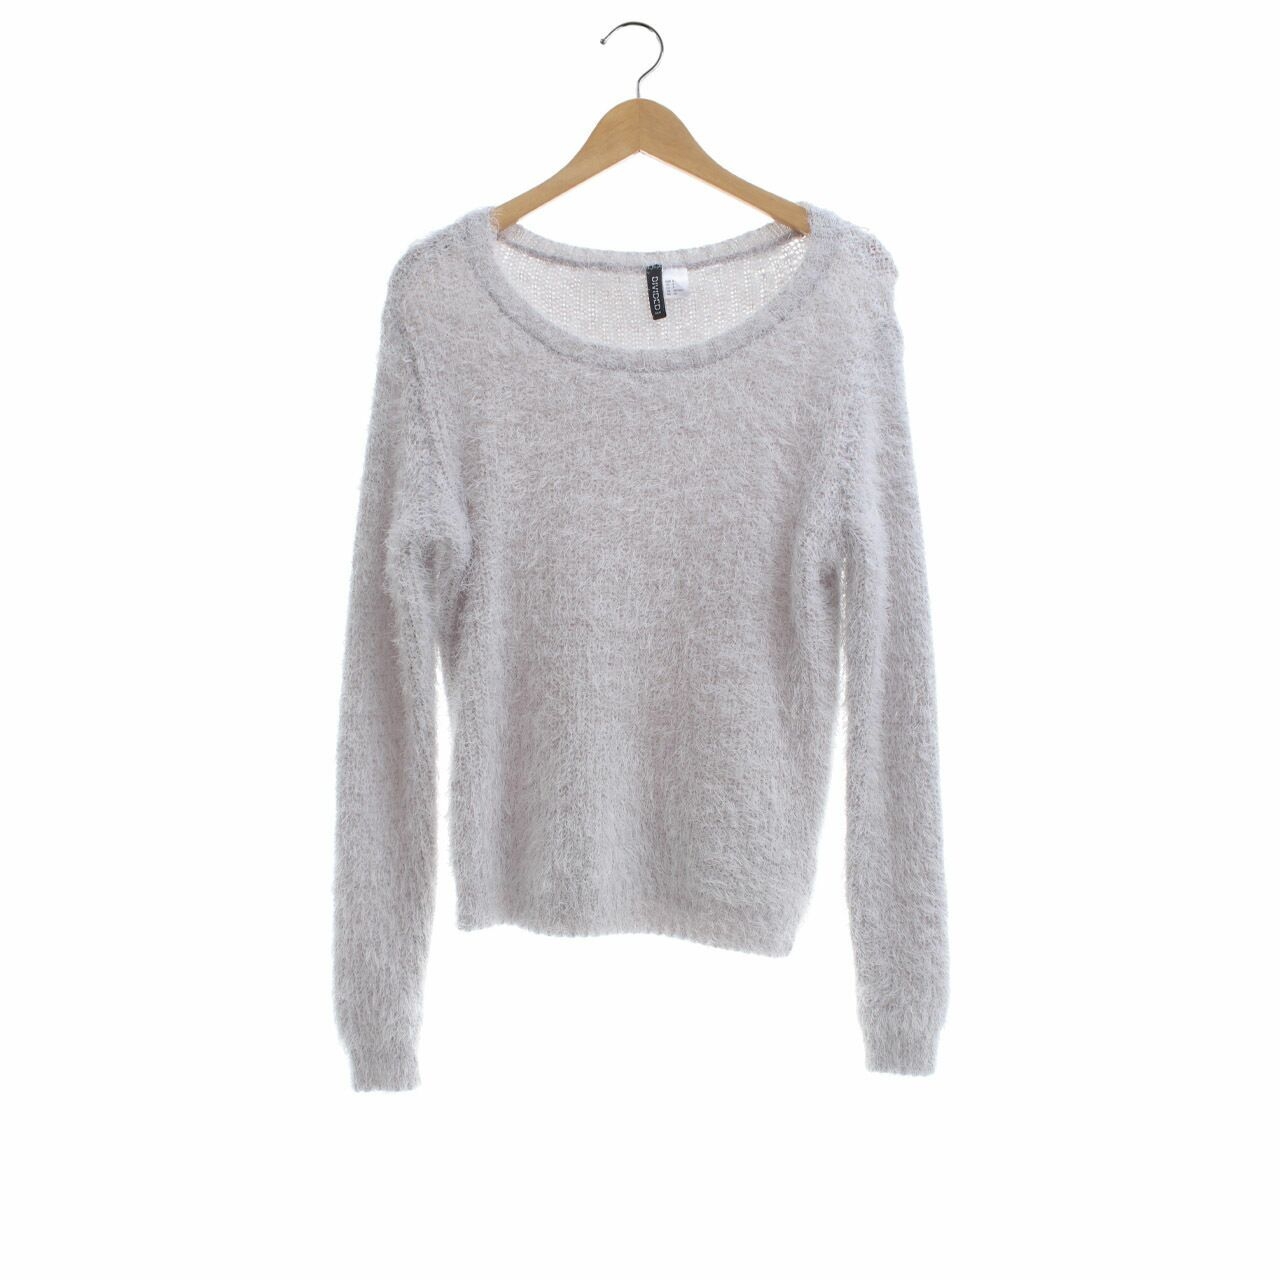 H&M Light Grey Faux Fur Sweater